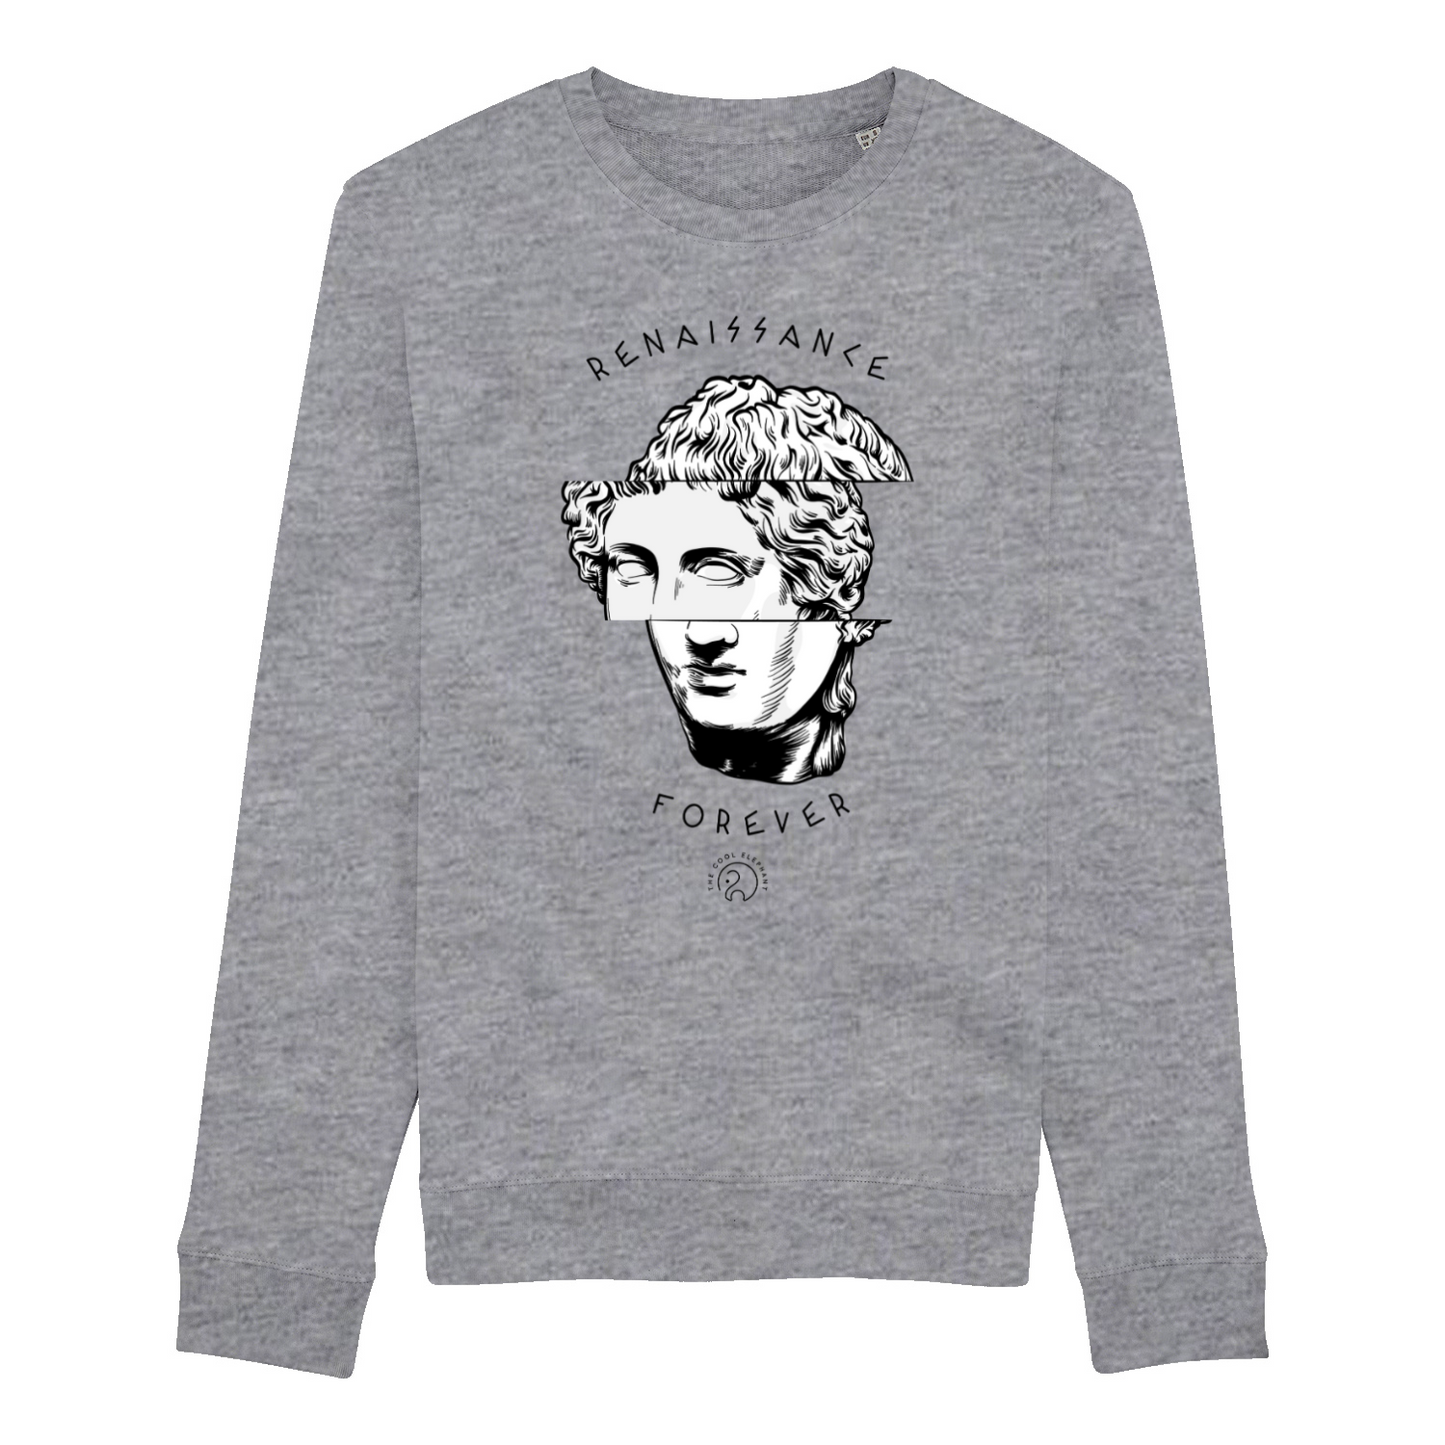 Sweatshirt "Renaissance Forever"